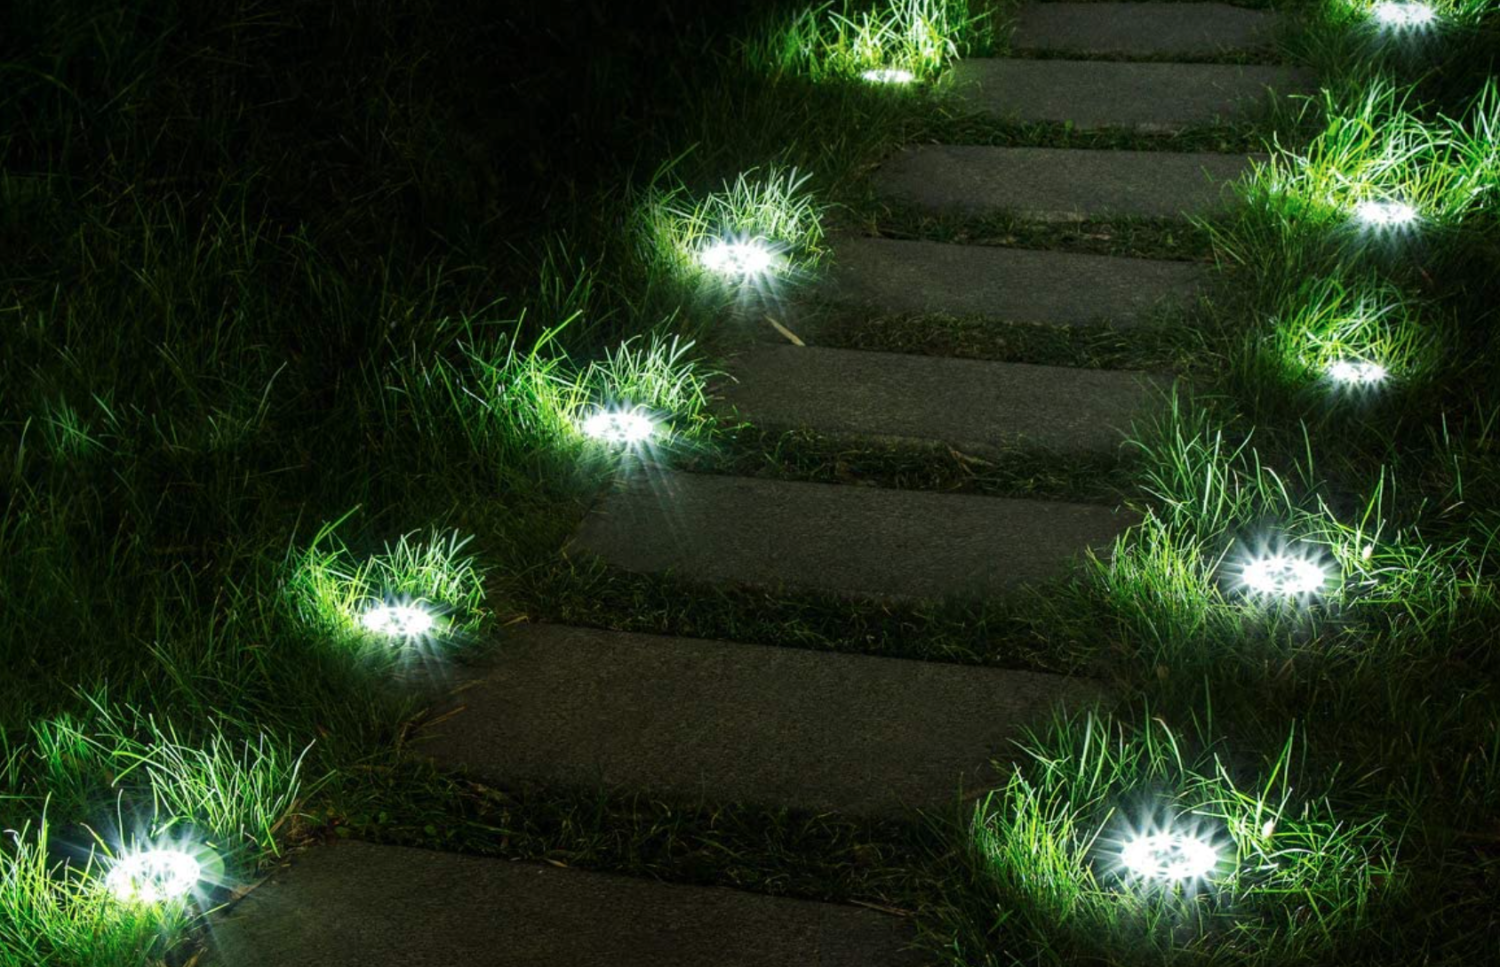 Solar Power LED Lawn Light Outdoor Waterproof Garden Landscape Lamp Ground Plug